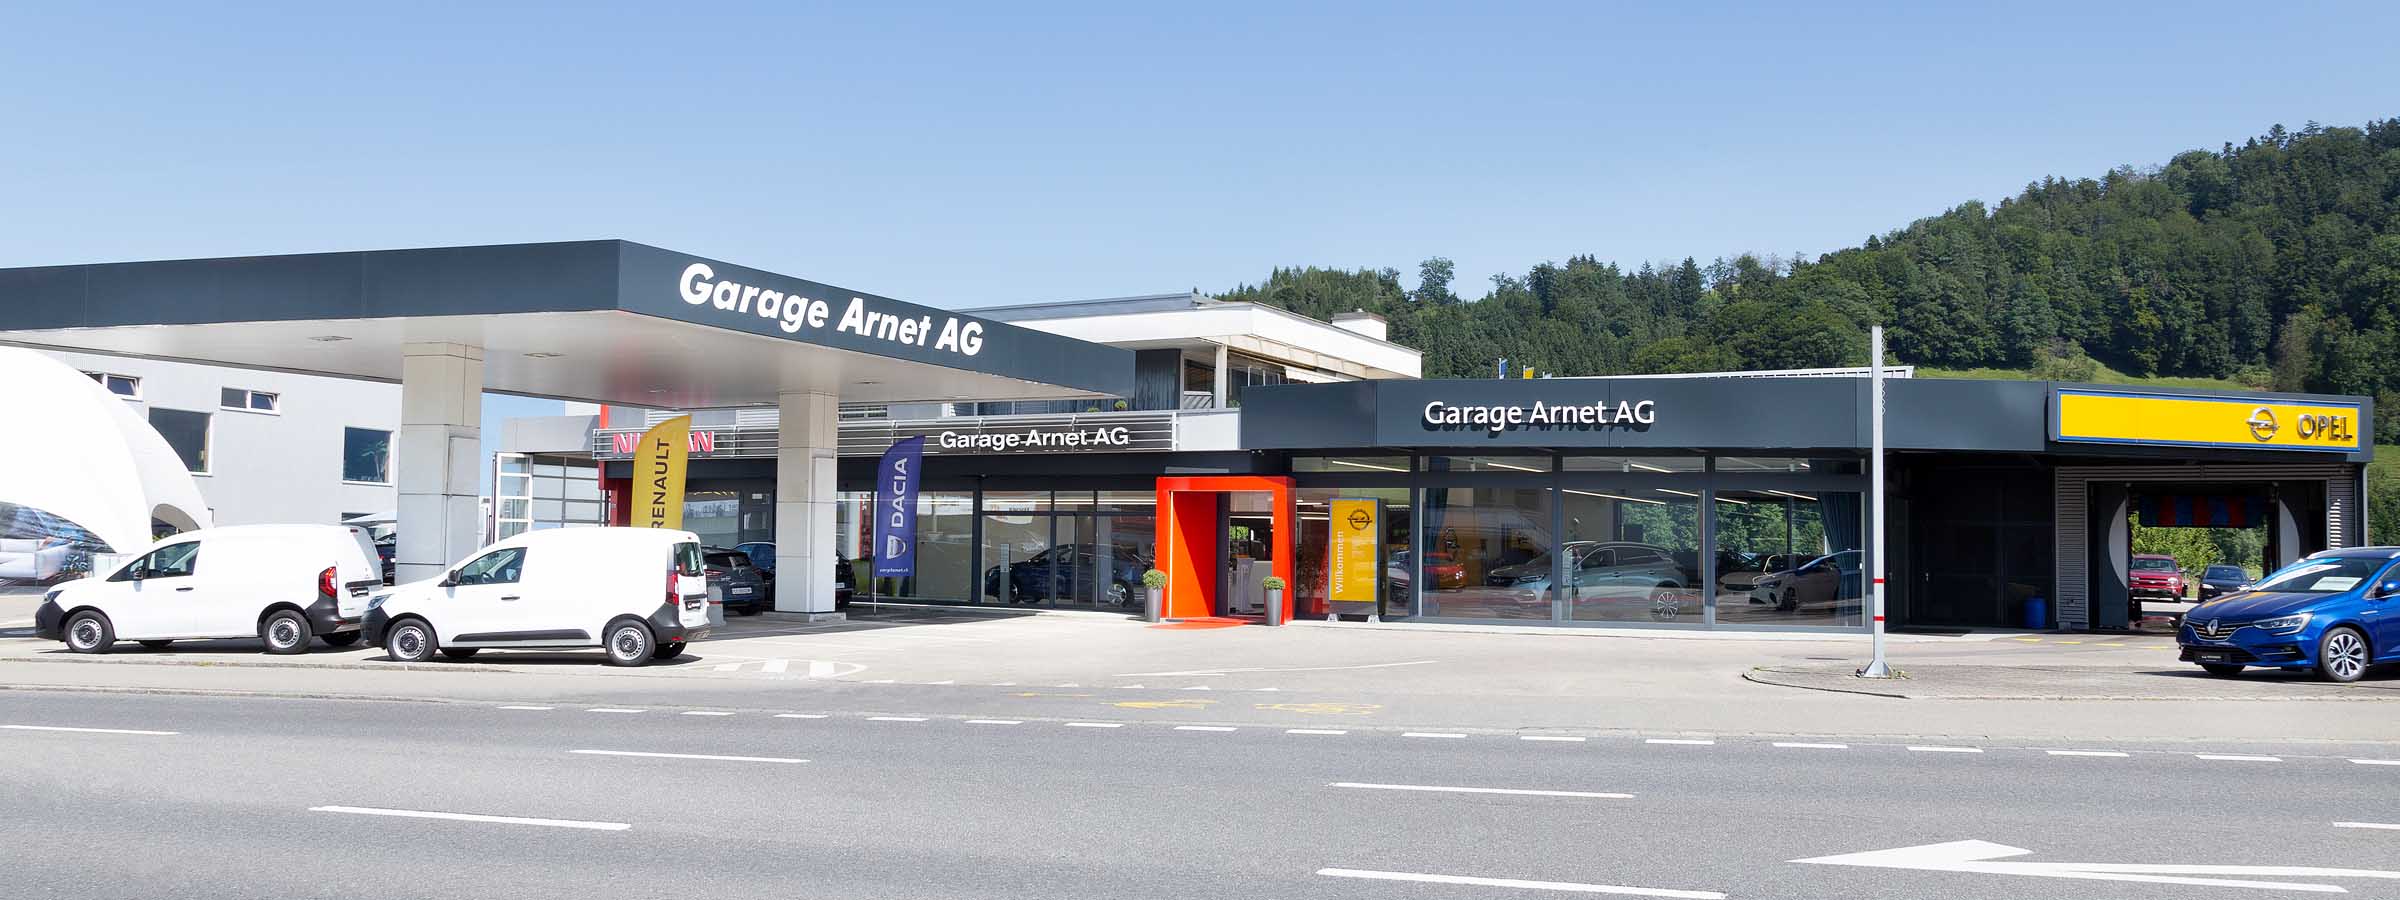 Garage Arnet AG Willisau - Luzern